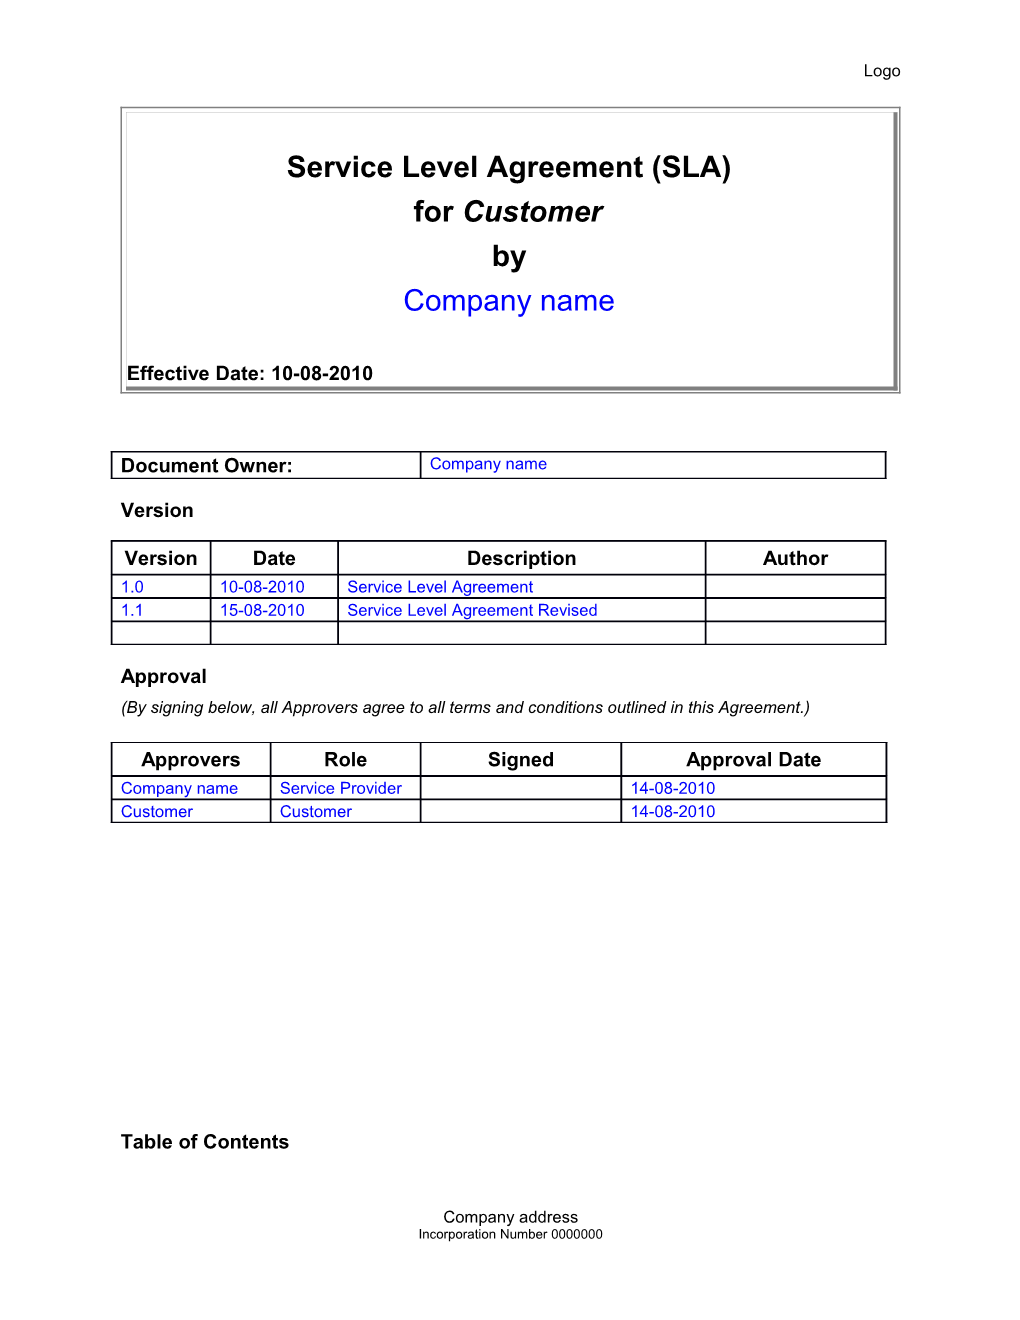 Service Level Agreement (SLA) Template s1